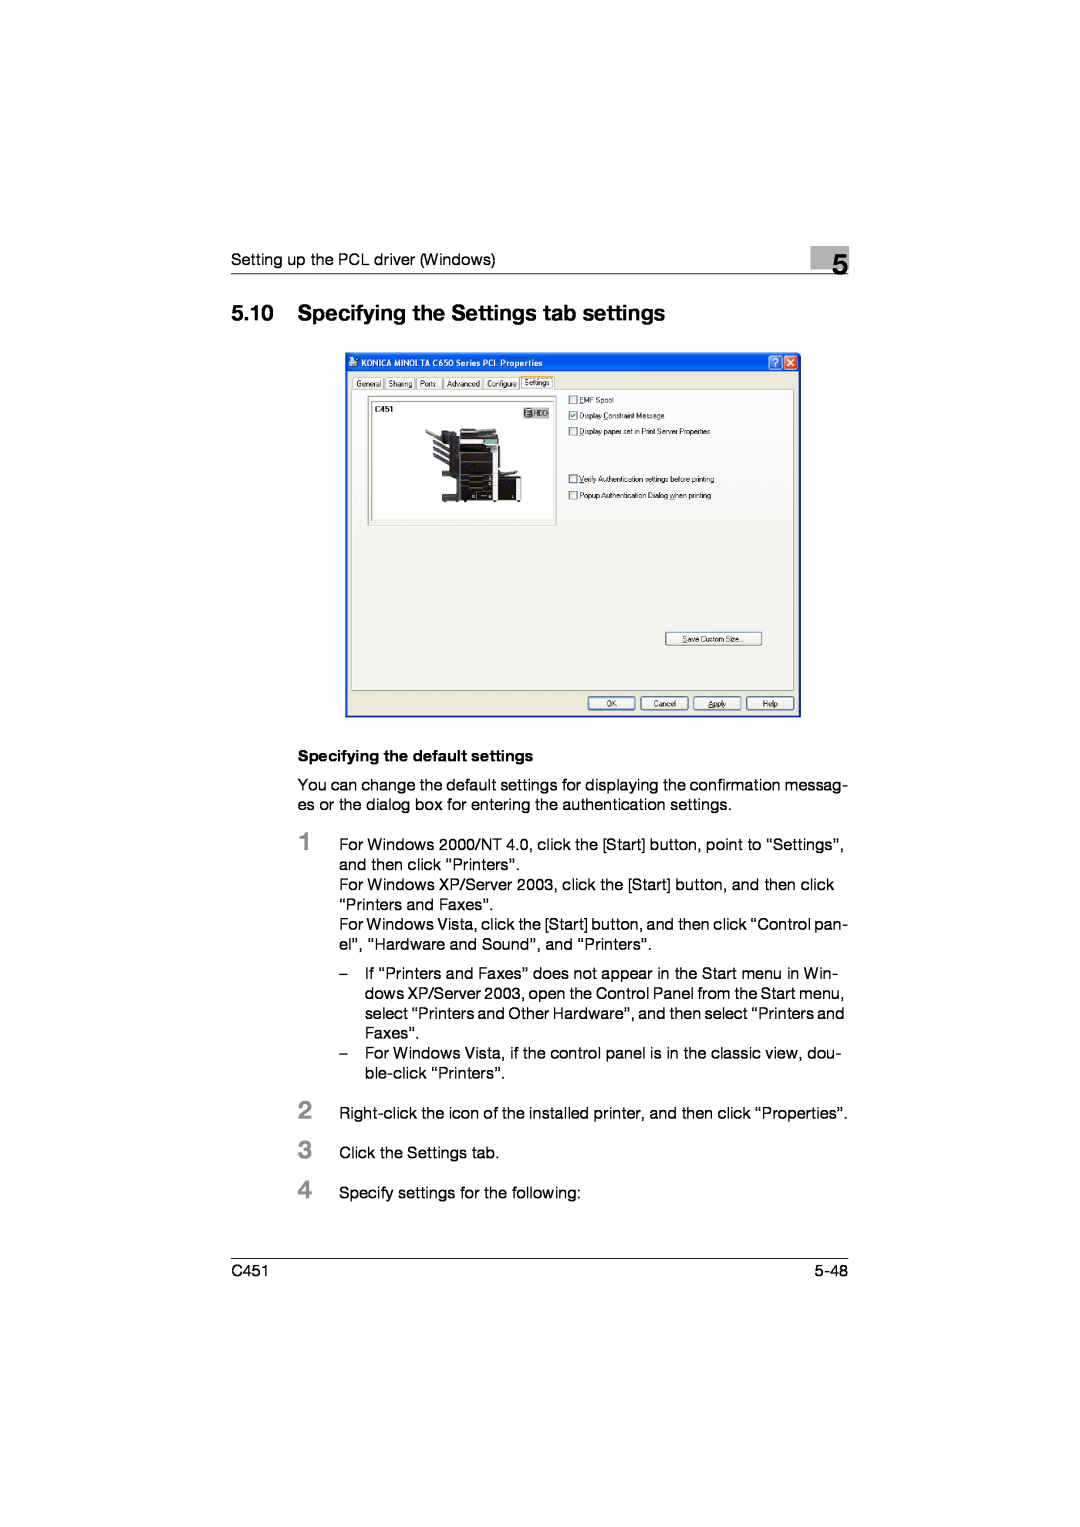 Konica Minolta C451 manual 5.10Specifying the Settings tab settings, 2 3 4, Specifying the default settings 